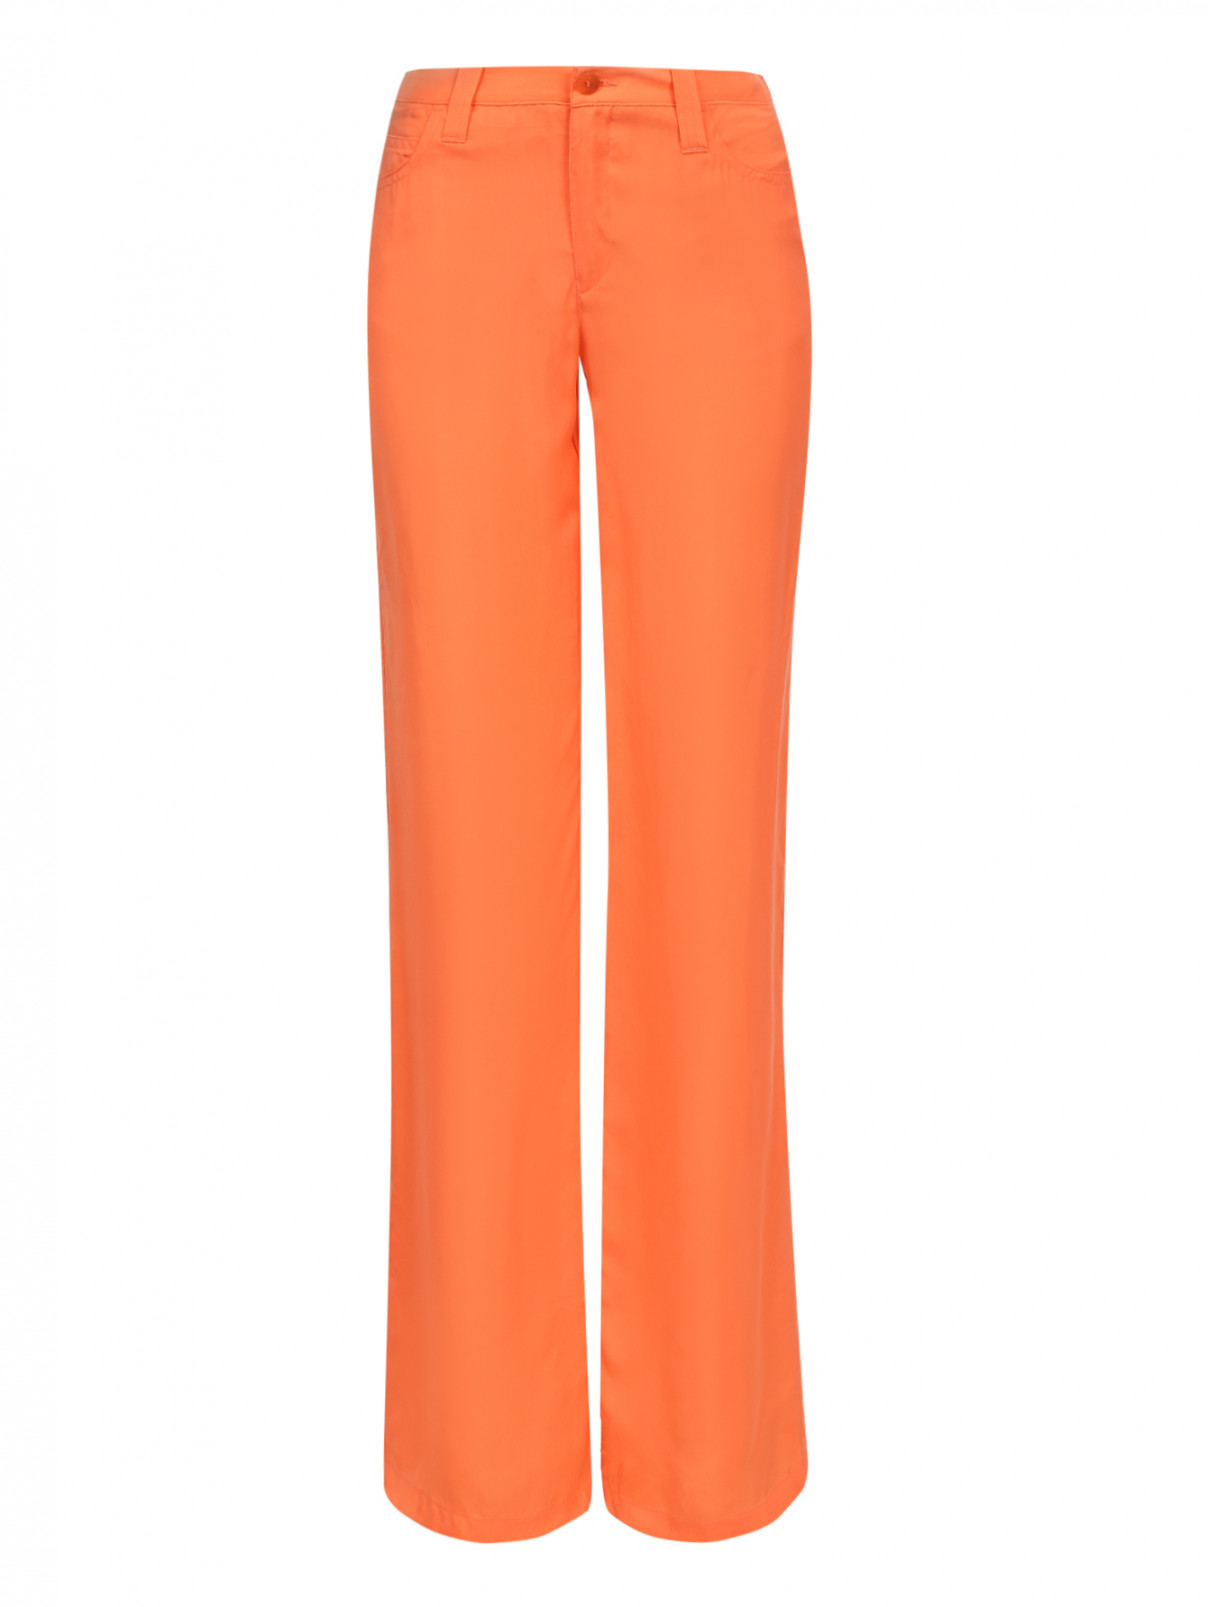 Брюки свободного кроя Armani Jeans  –  Общий вид  – Цвет:  Оранжевый